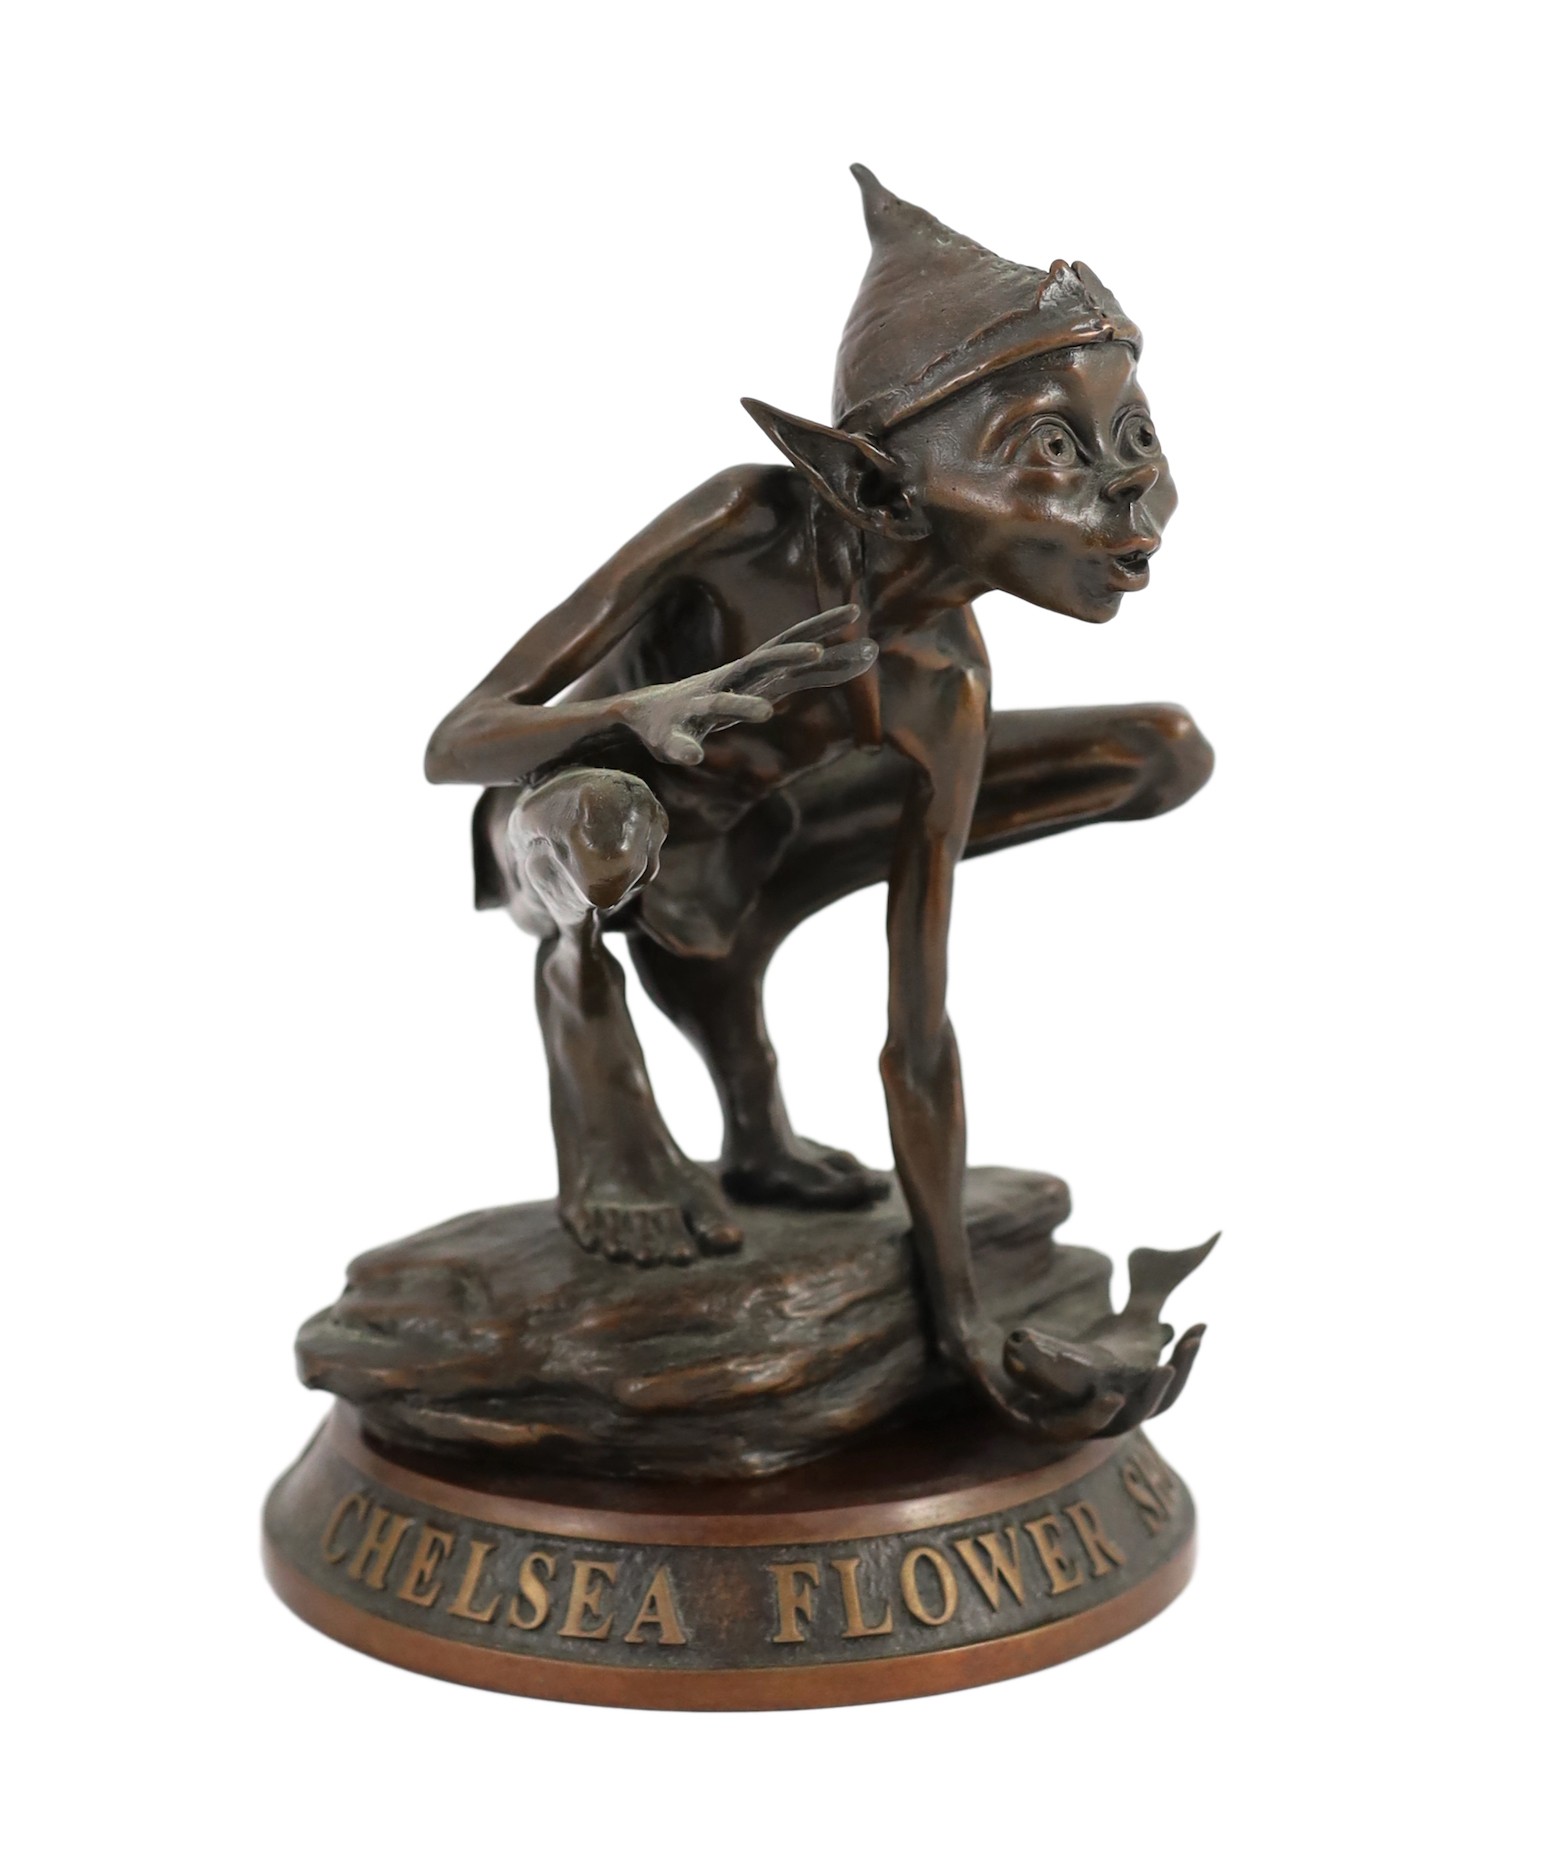 David Goode (British, b.1966). A Chelsea Flower Show Centenary bronze of a crouching pixie tickling a trout, height 23cm                                                                                                    